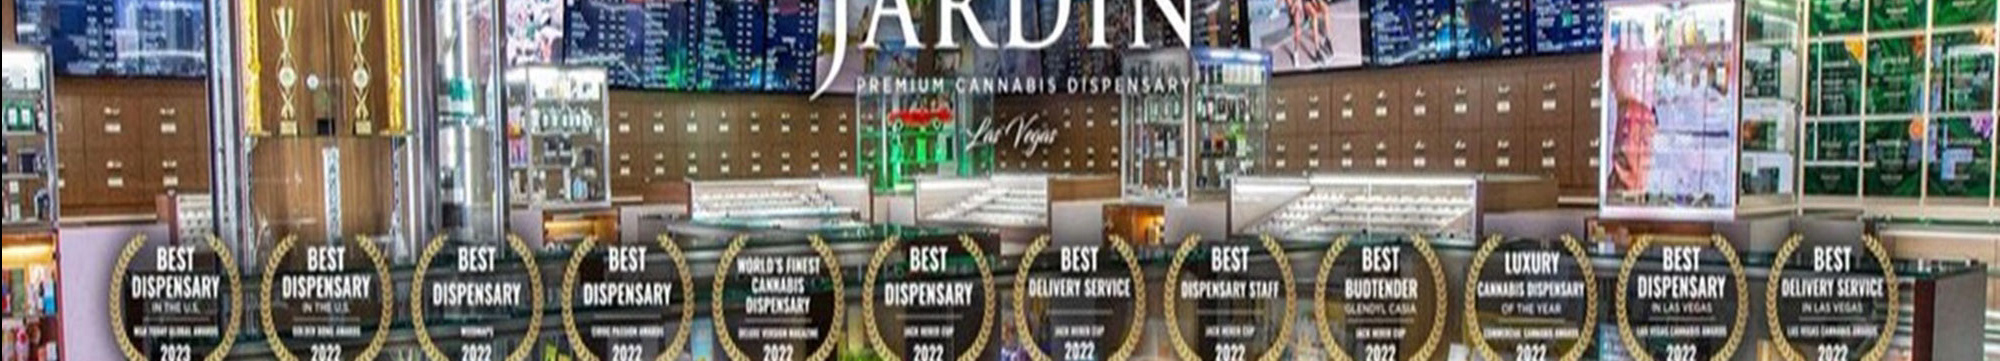 Jardin Las Vegas's profile banner